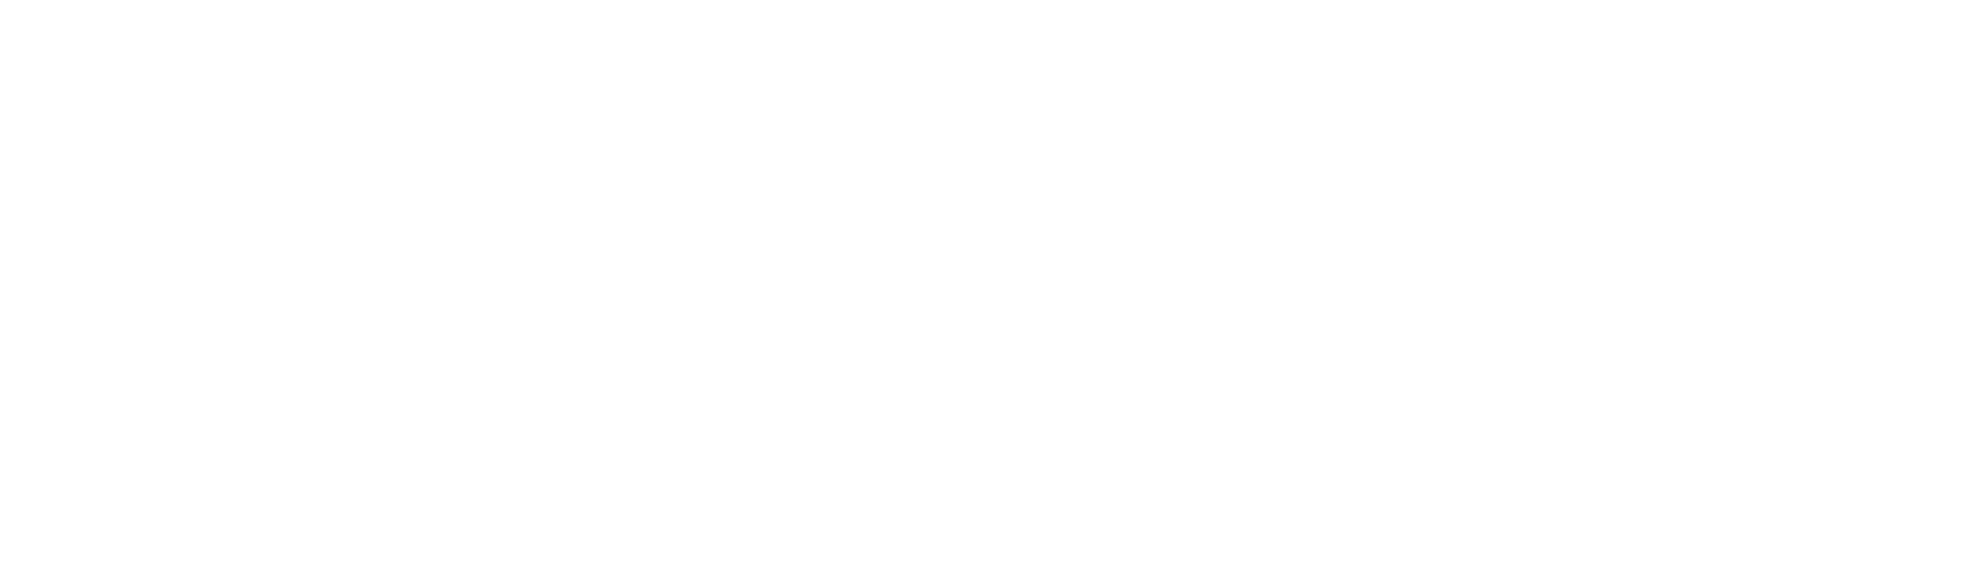 Browns-logo-white